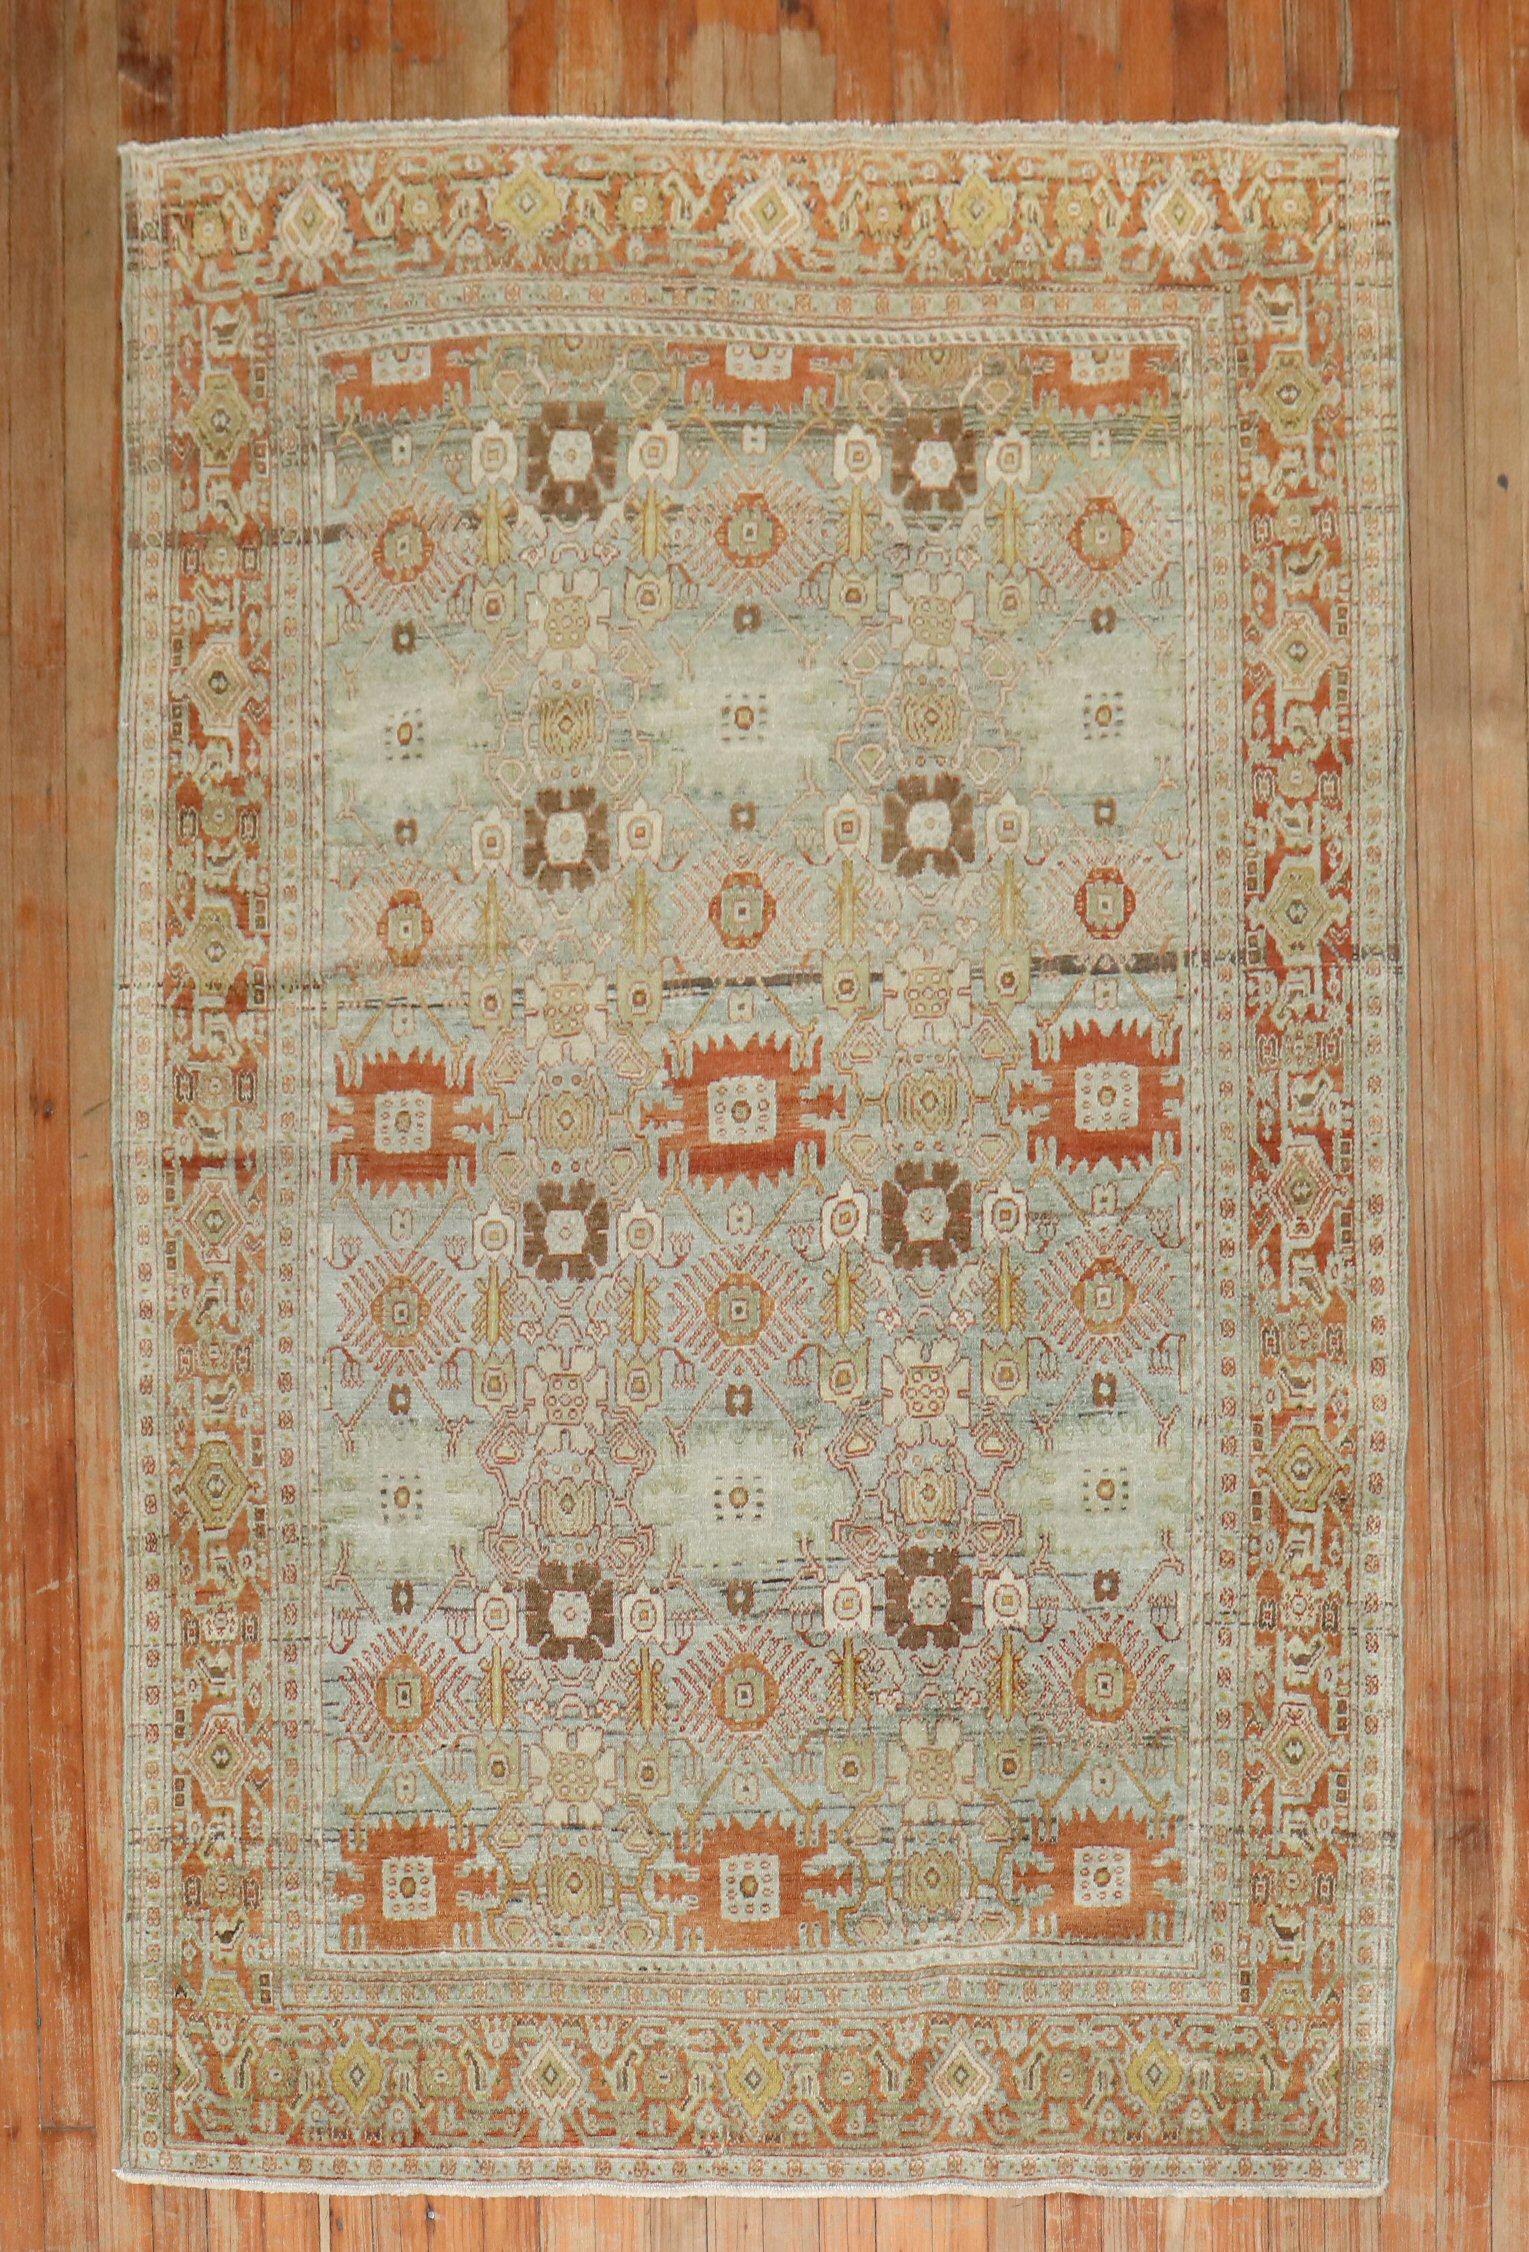 
circa 1920 warm colored Antique Persian Senneh Rug

Details
rug no.	j3358
size	4' 4